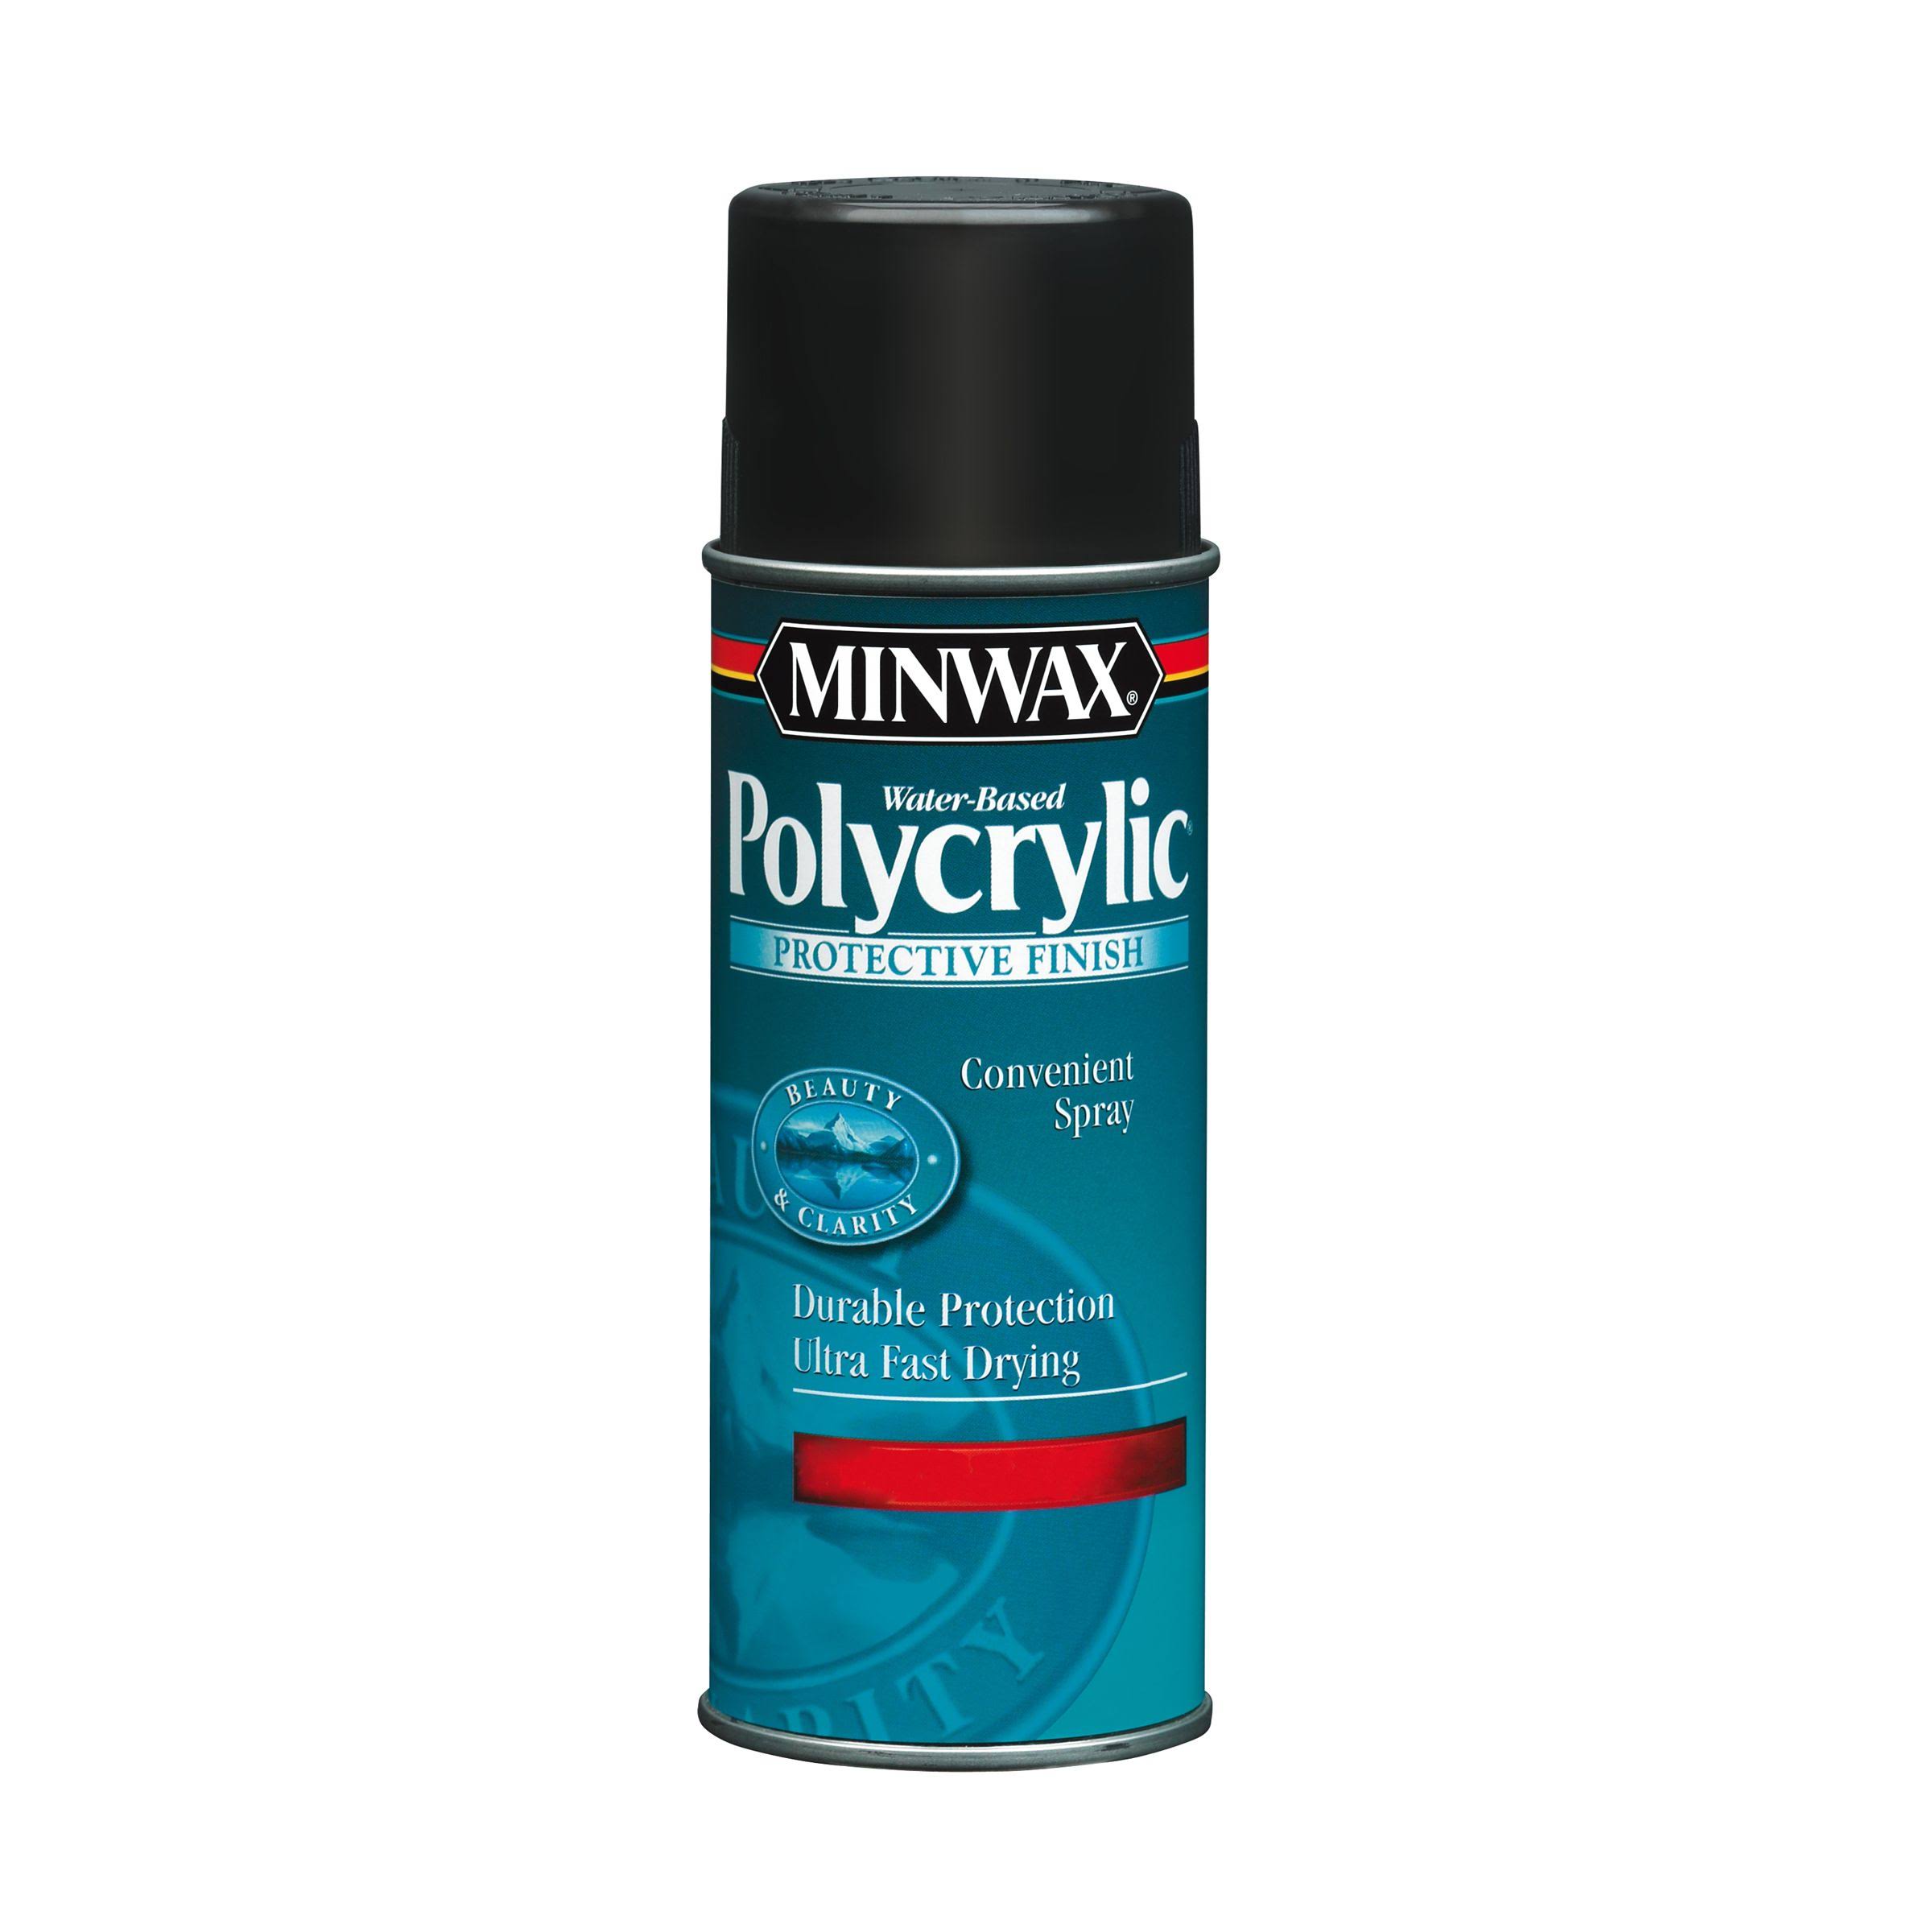 Minwax Polycrylic Water-Based Spray - Clear Satin, 11.5oz